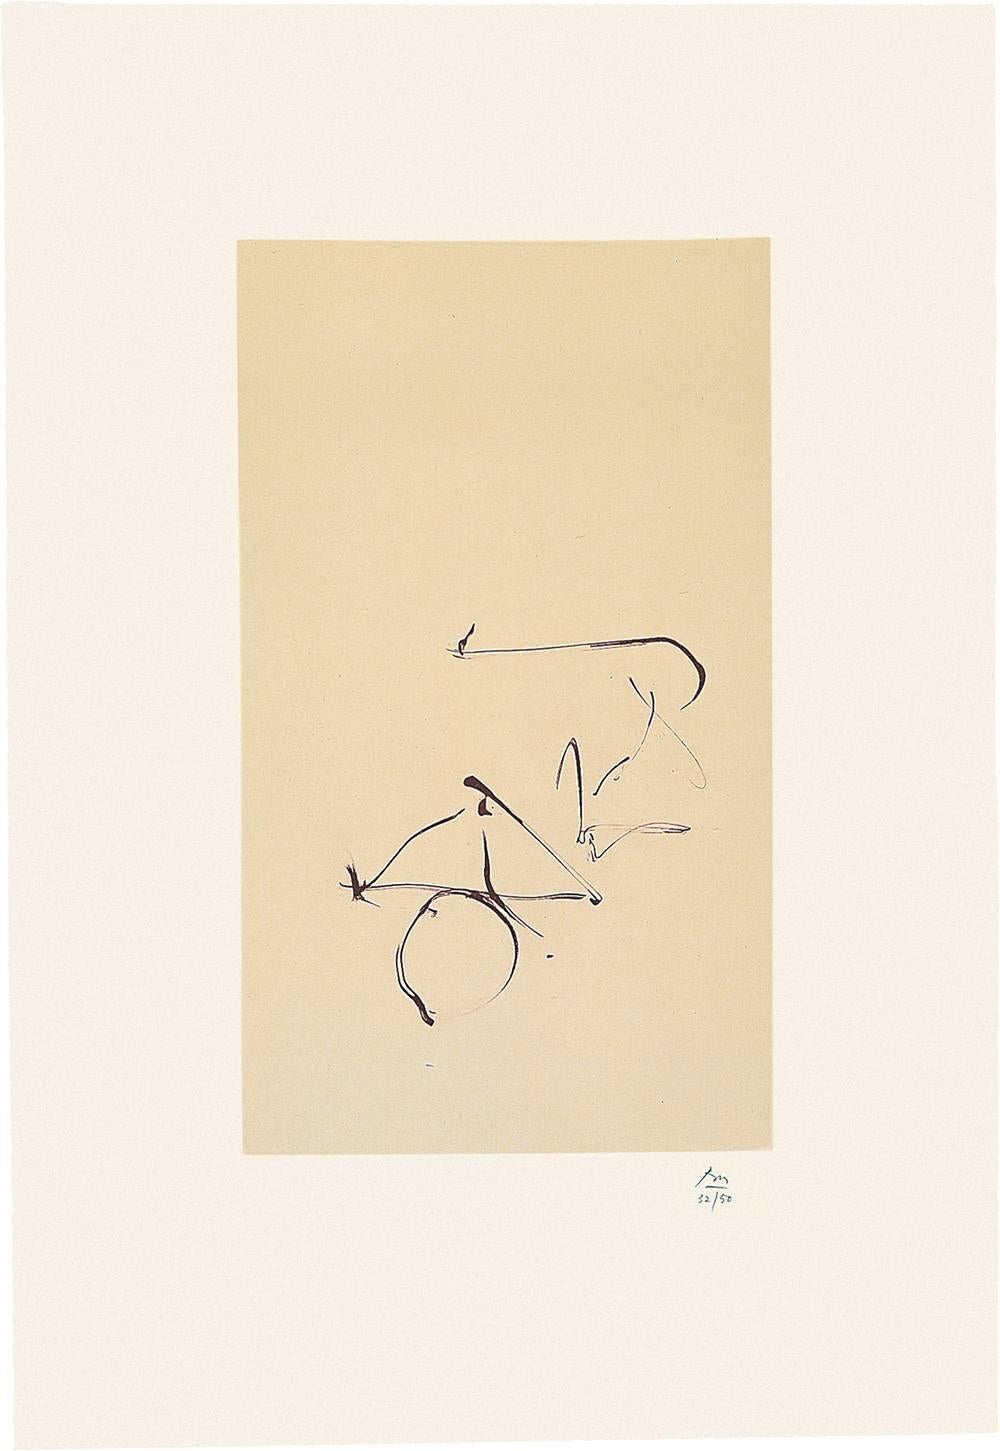 Robert Motherwell Abstract Print - Octavio Paz Suite: Return